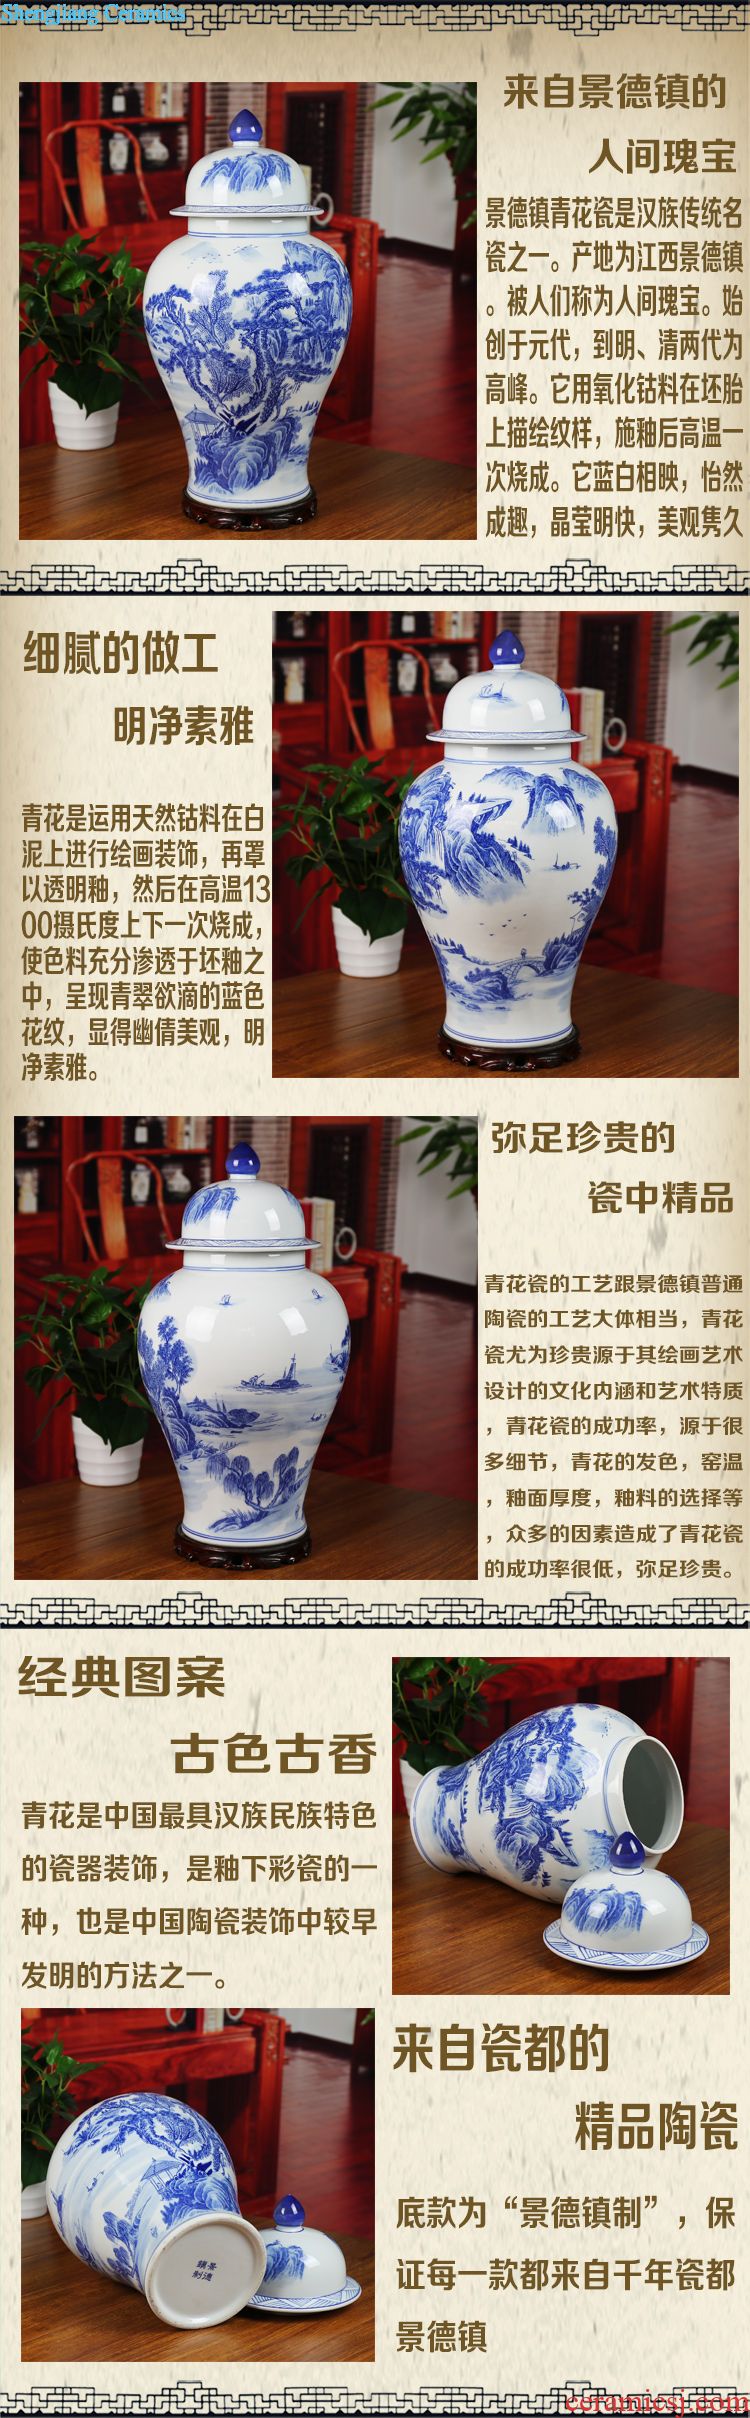 Furnishing articles of jingdezhen ceramics kiln ruby red storage tank porcelain jar with cover large tea meters oil jar ornaments